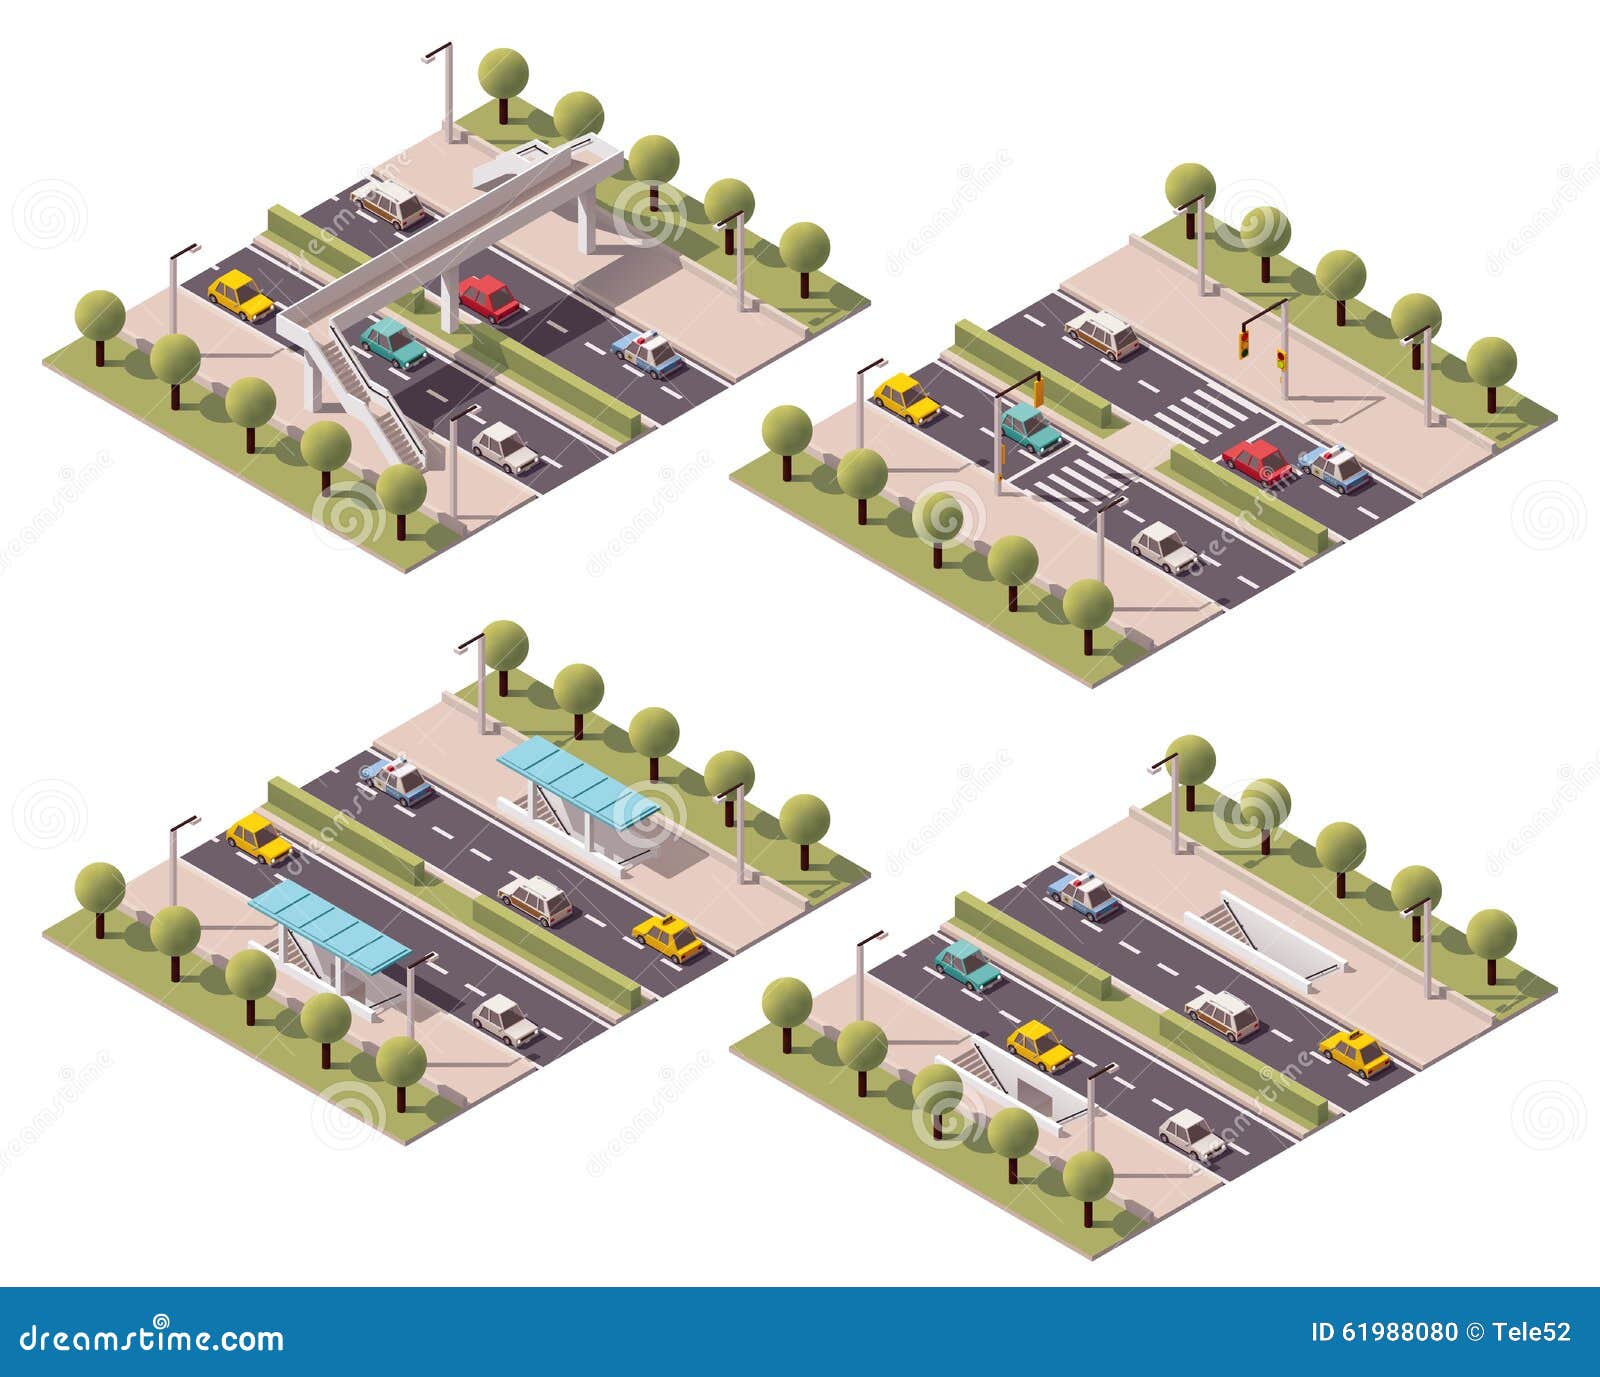 3D Isometric Flat Vector Conceptual Illustration Of Pedestrian